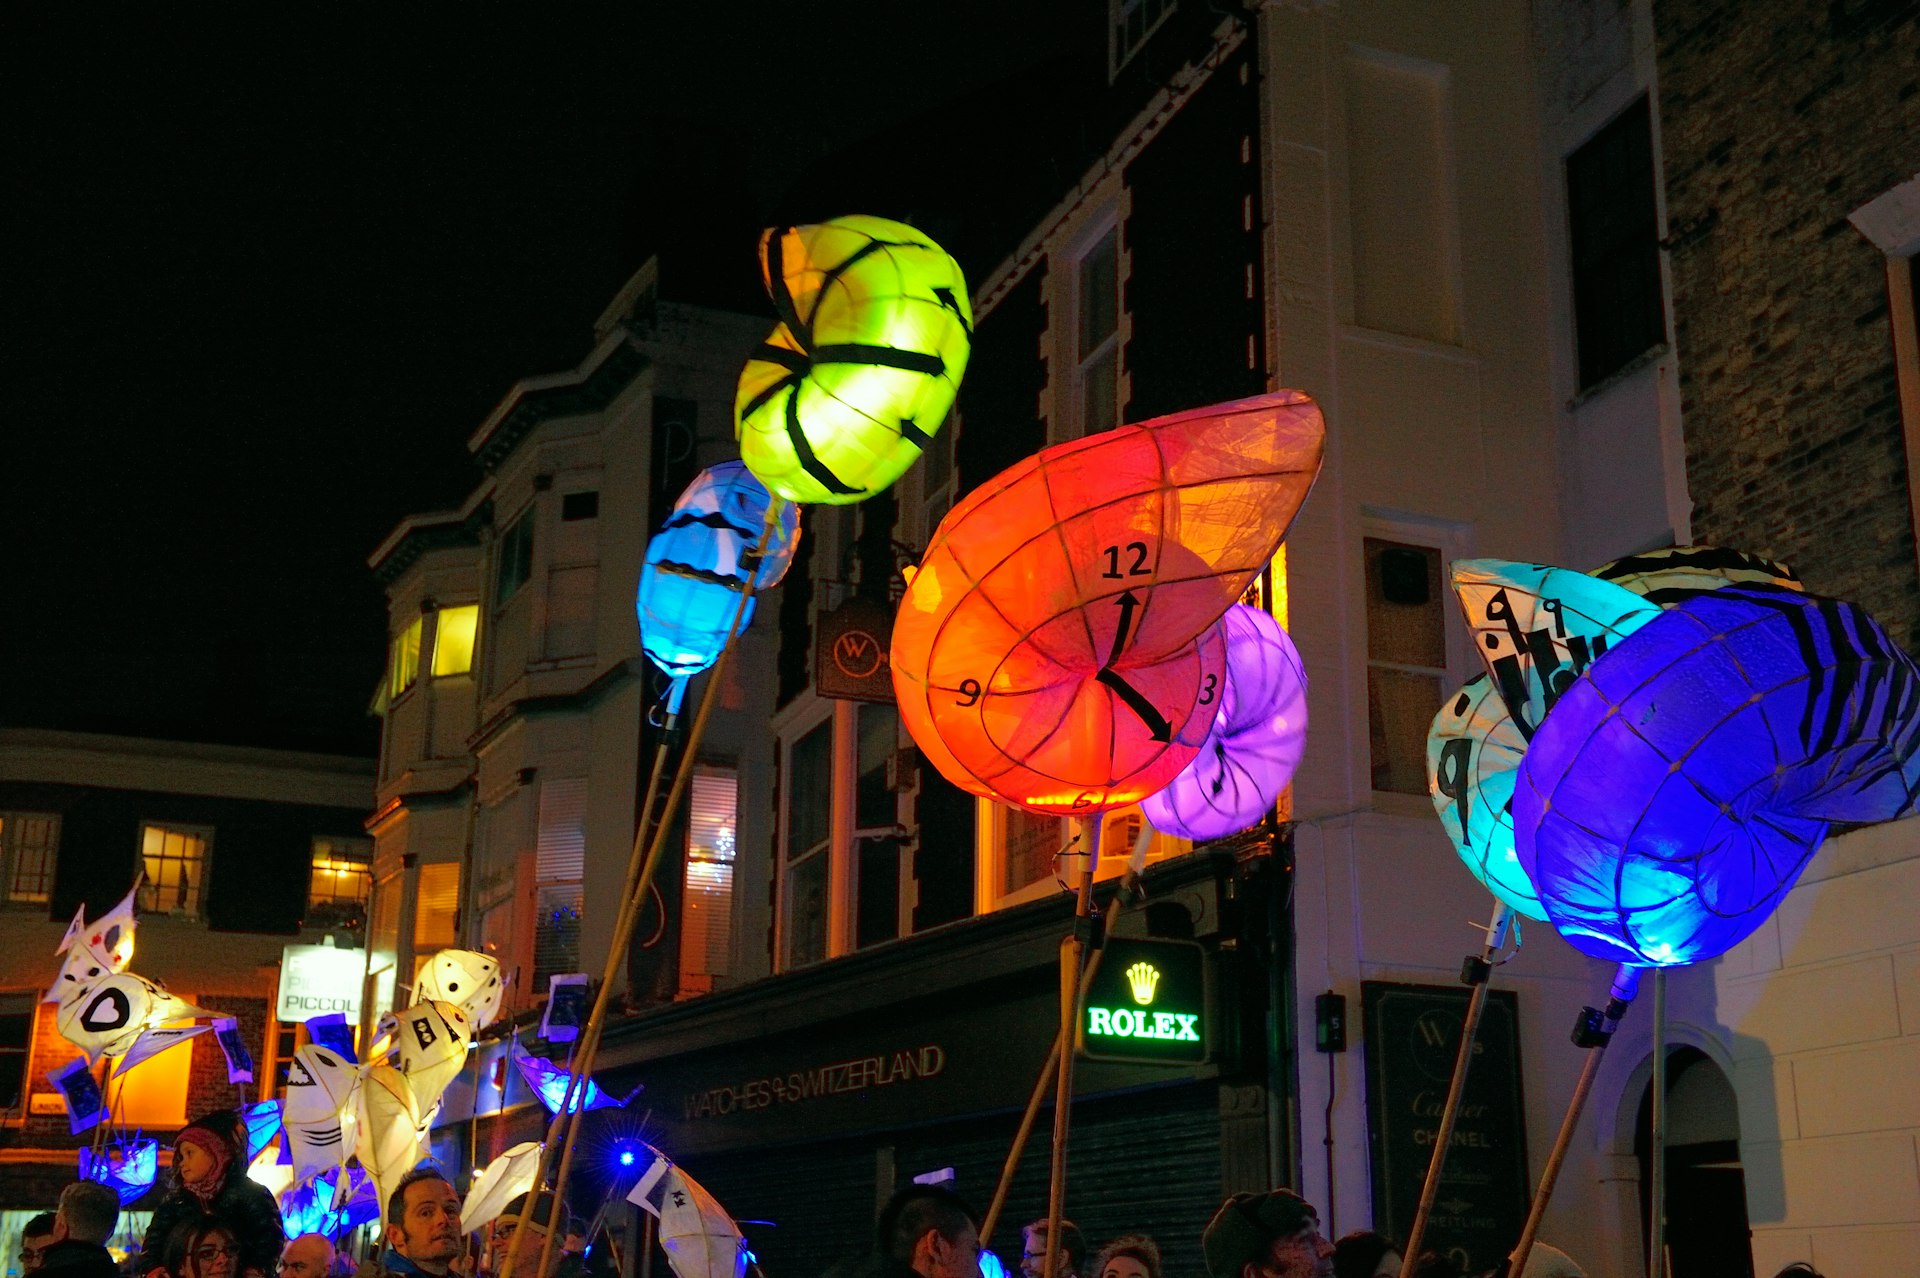 Brighton, England's annual winter solstice lantern parade